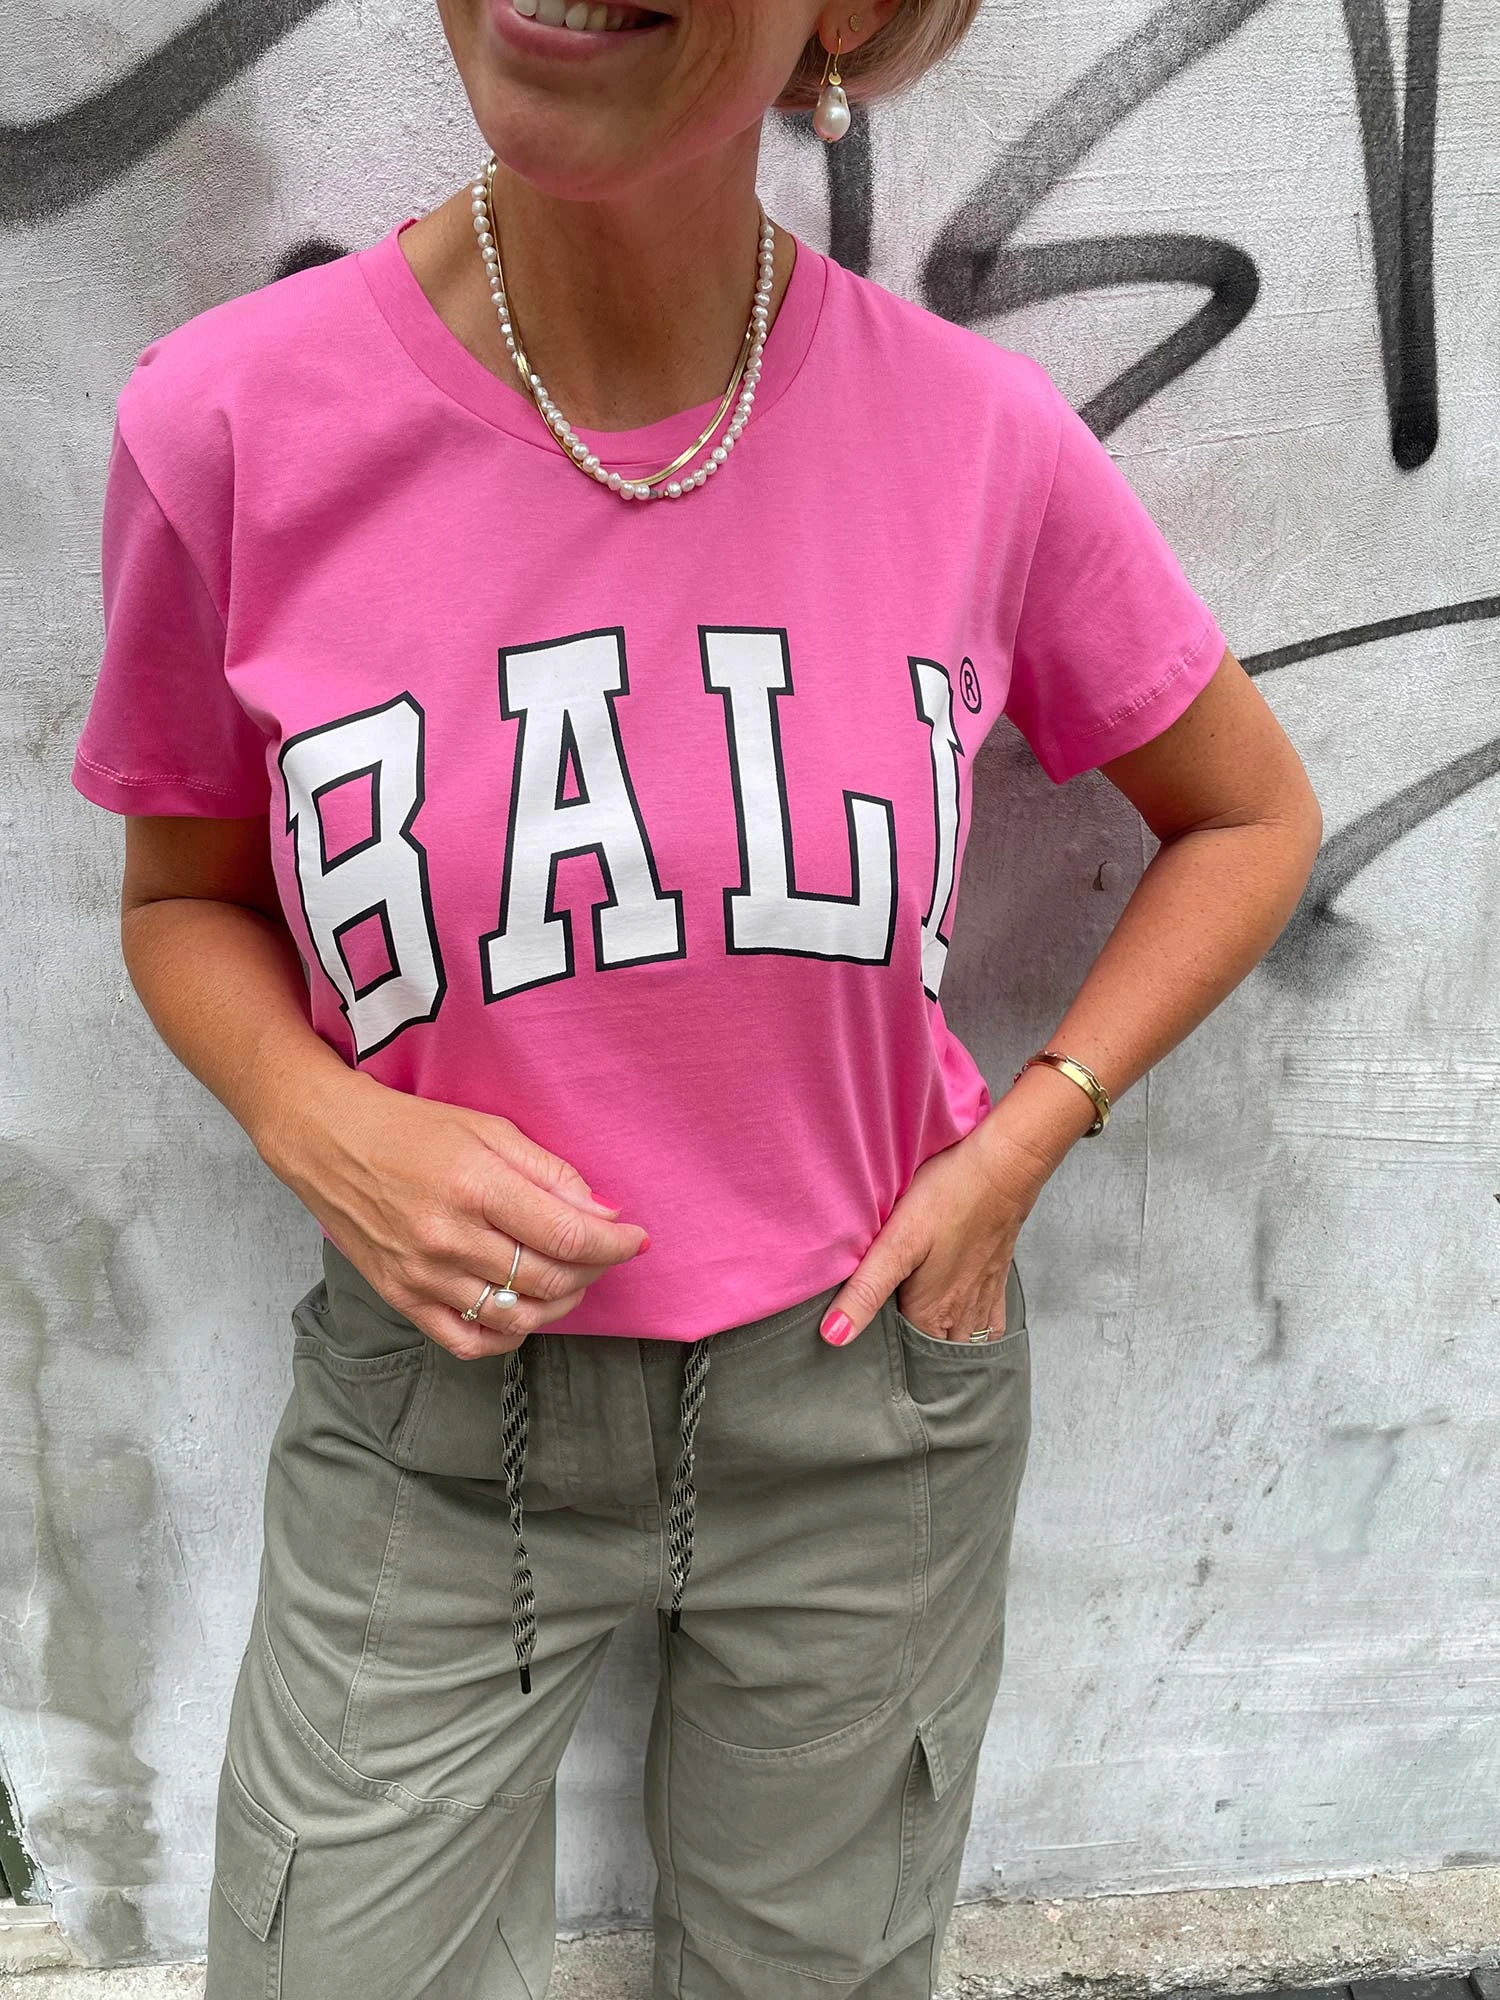 Ball R DAVID T-shirt | Køb ikoniske t-shirts her